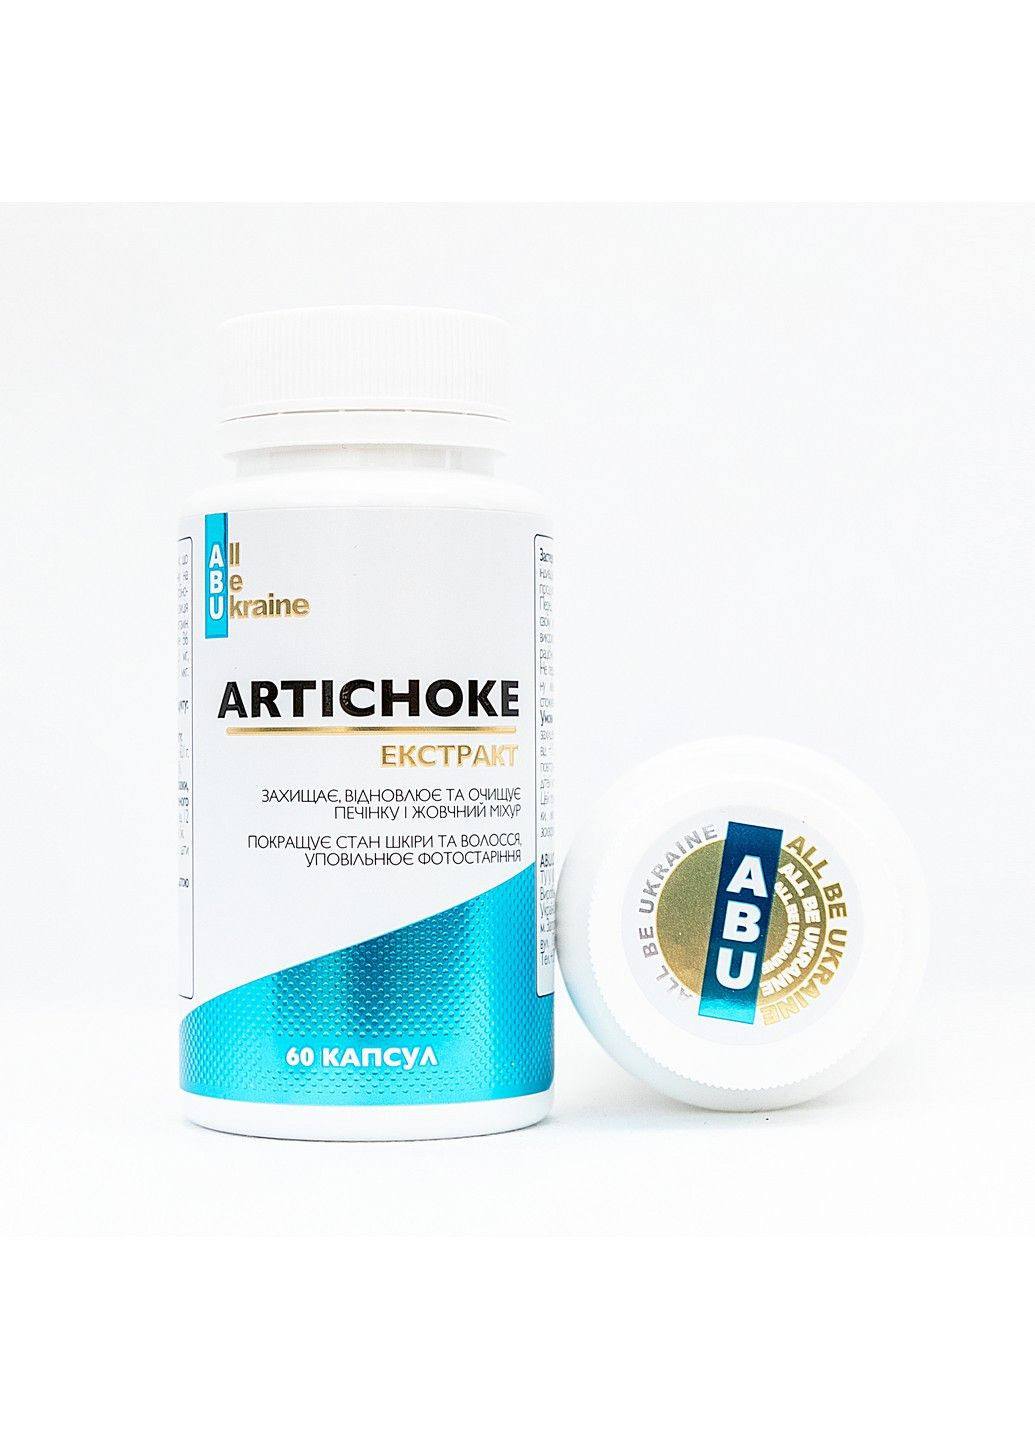 Комплекс для печени с артишоком Artichoke Extract+, 60 капсул ABU (All Be Ukraine) (292785615)